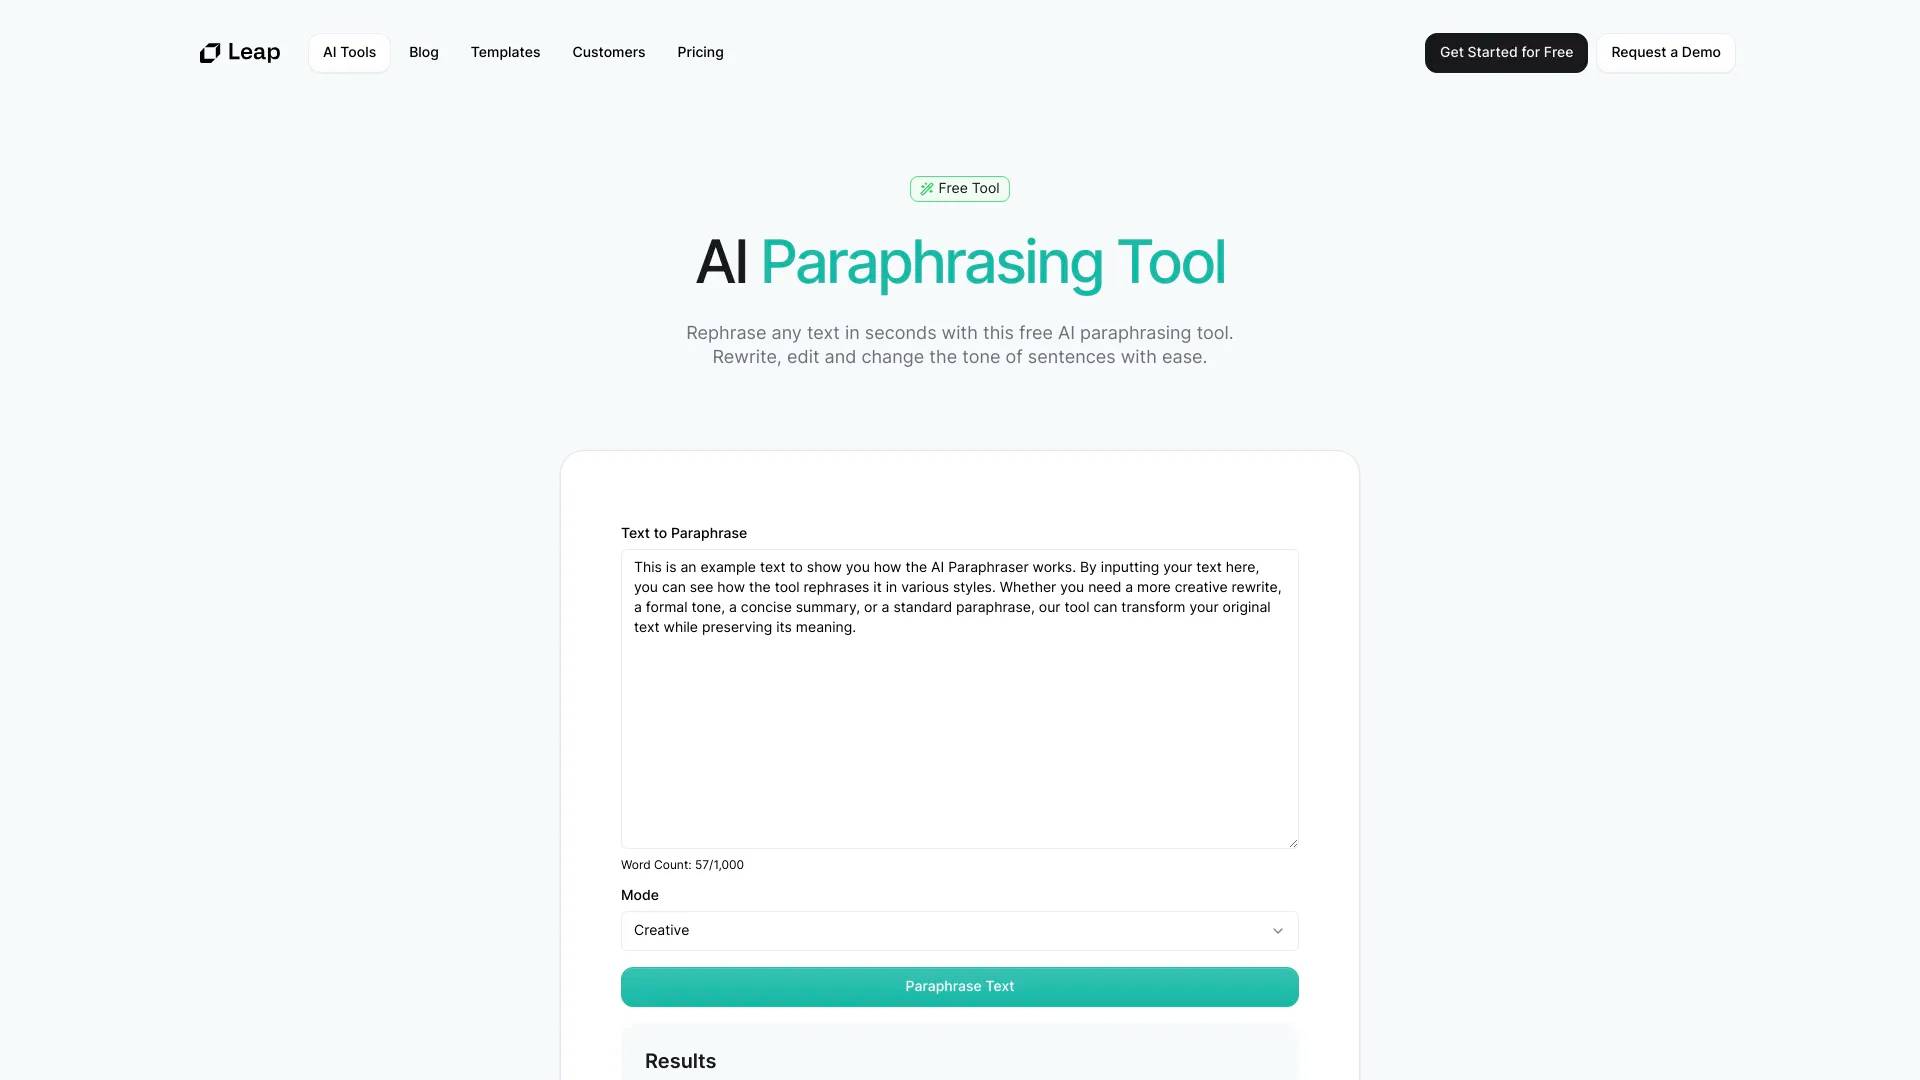 AI Paraphrasing Tool by Leap AI screenshot